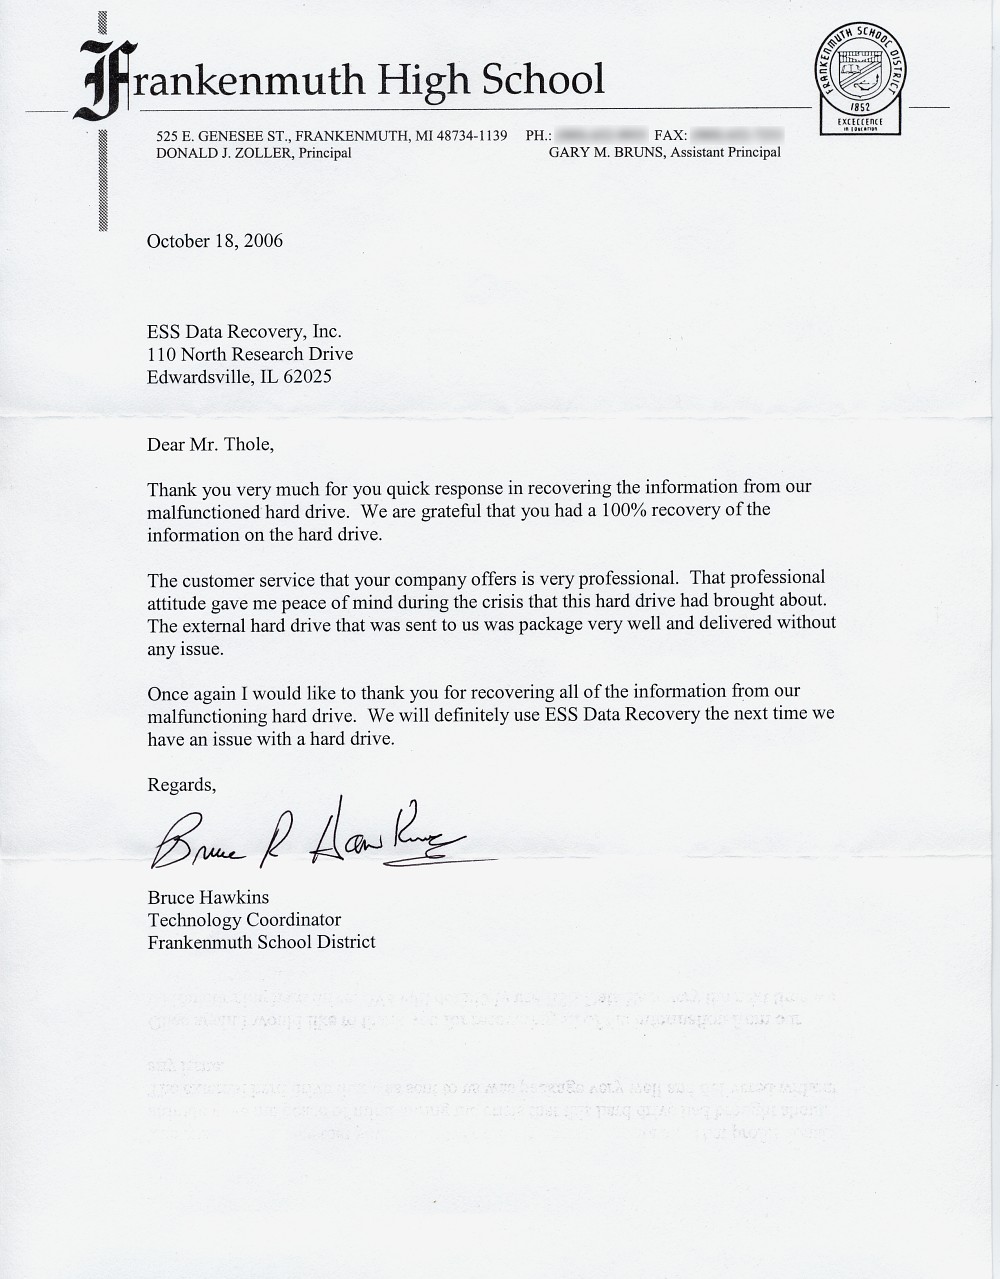 Frankenmuth High School testimonial letter